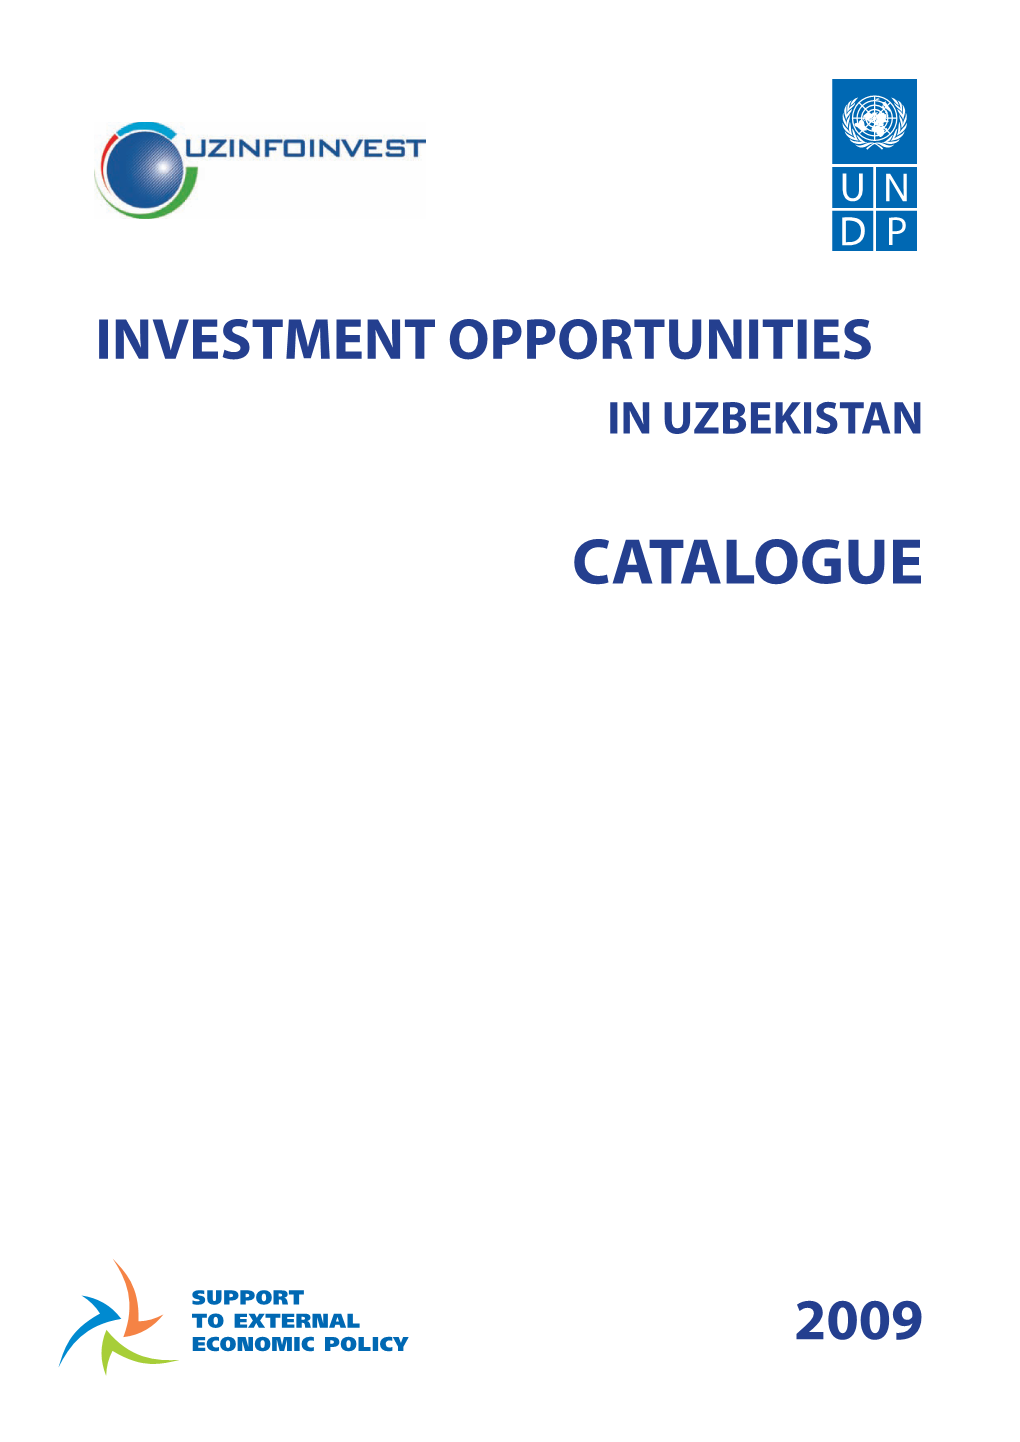 Catalogue of Investment Opportunities in Uzbekistan: 2009